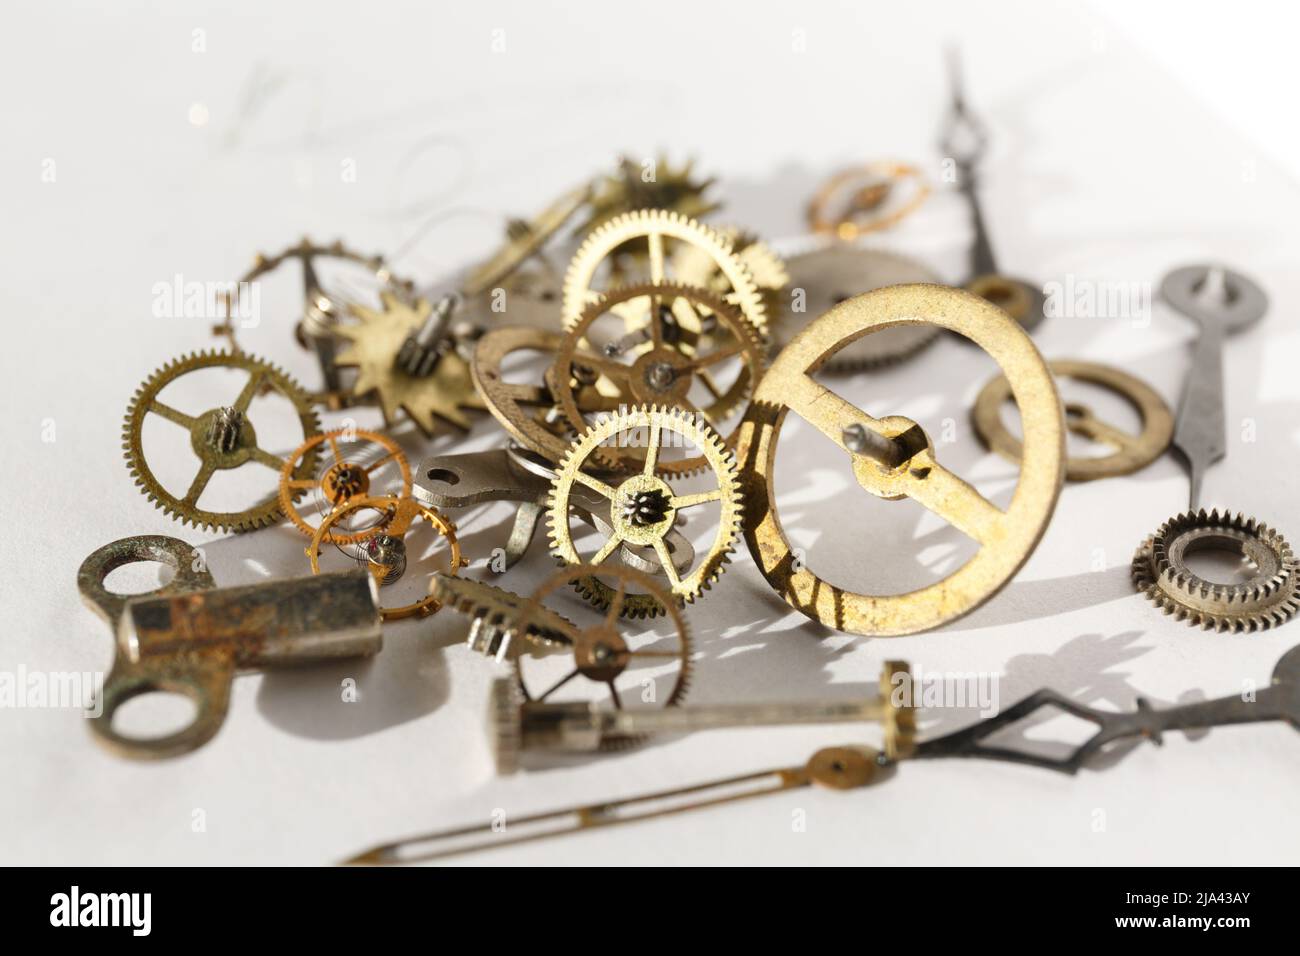 Turning cogwheels. Clock mechanism, gears, wheels, wristwatch parts close-up Stock Photo